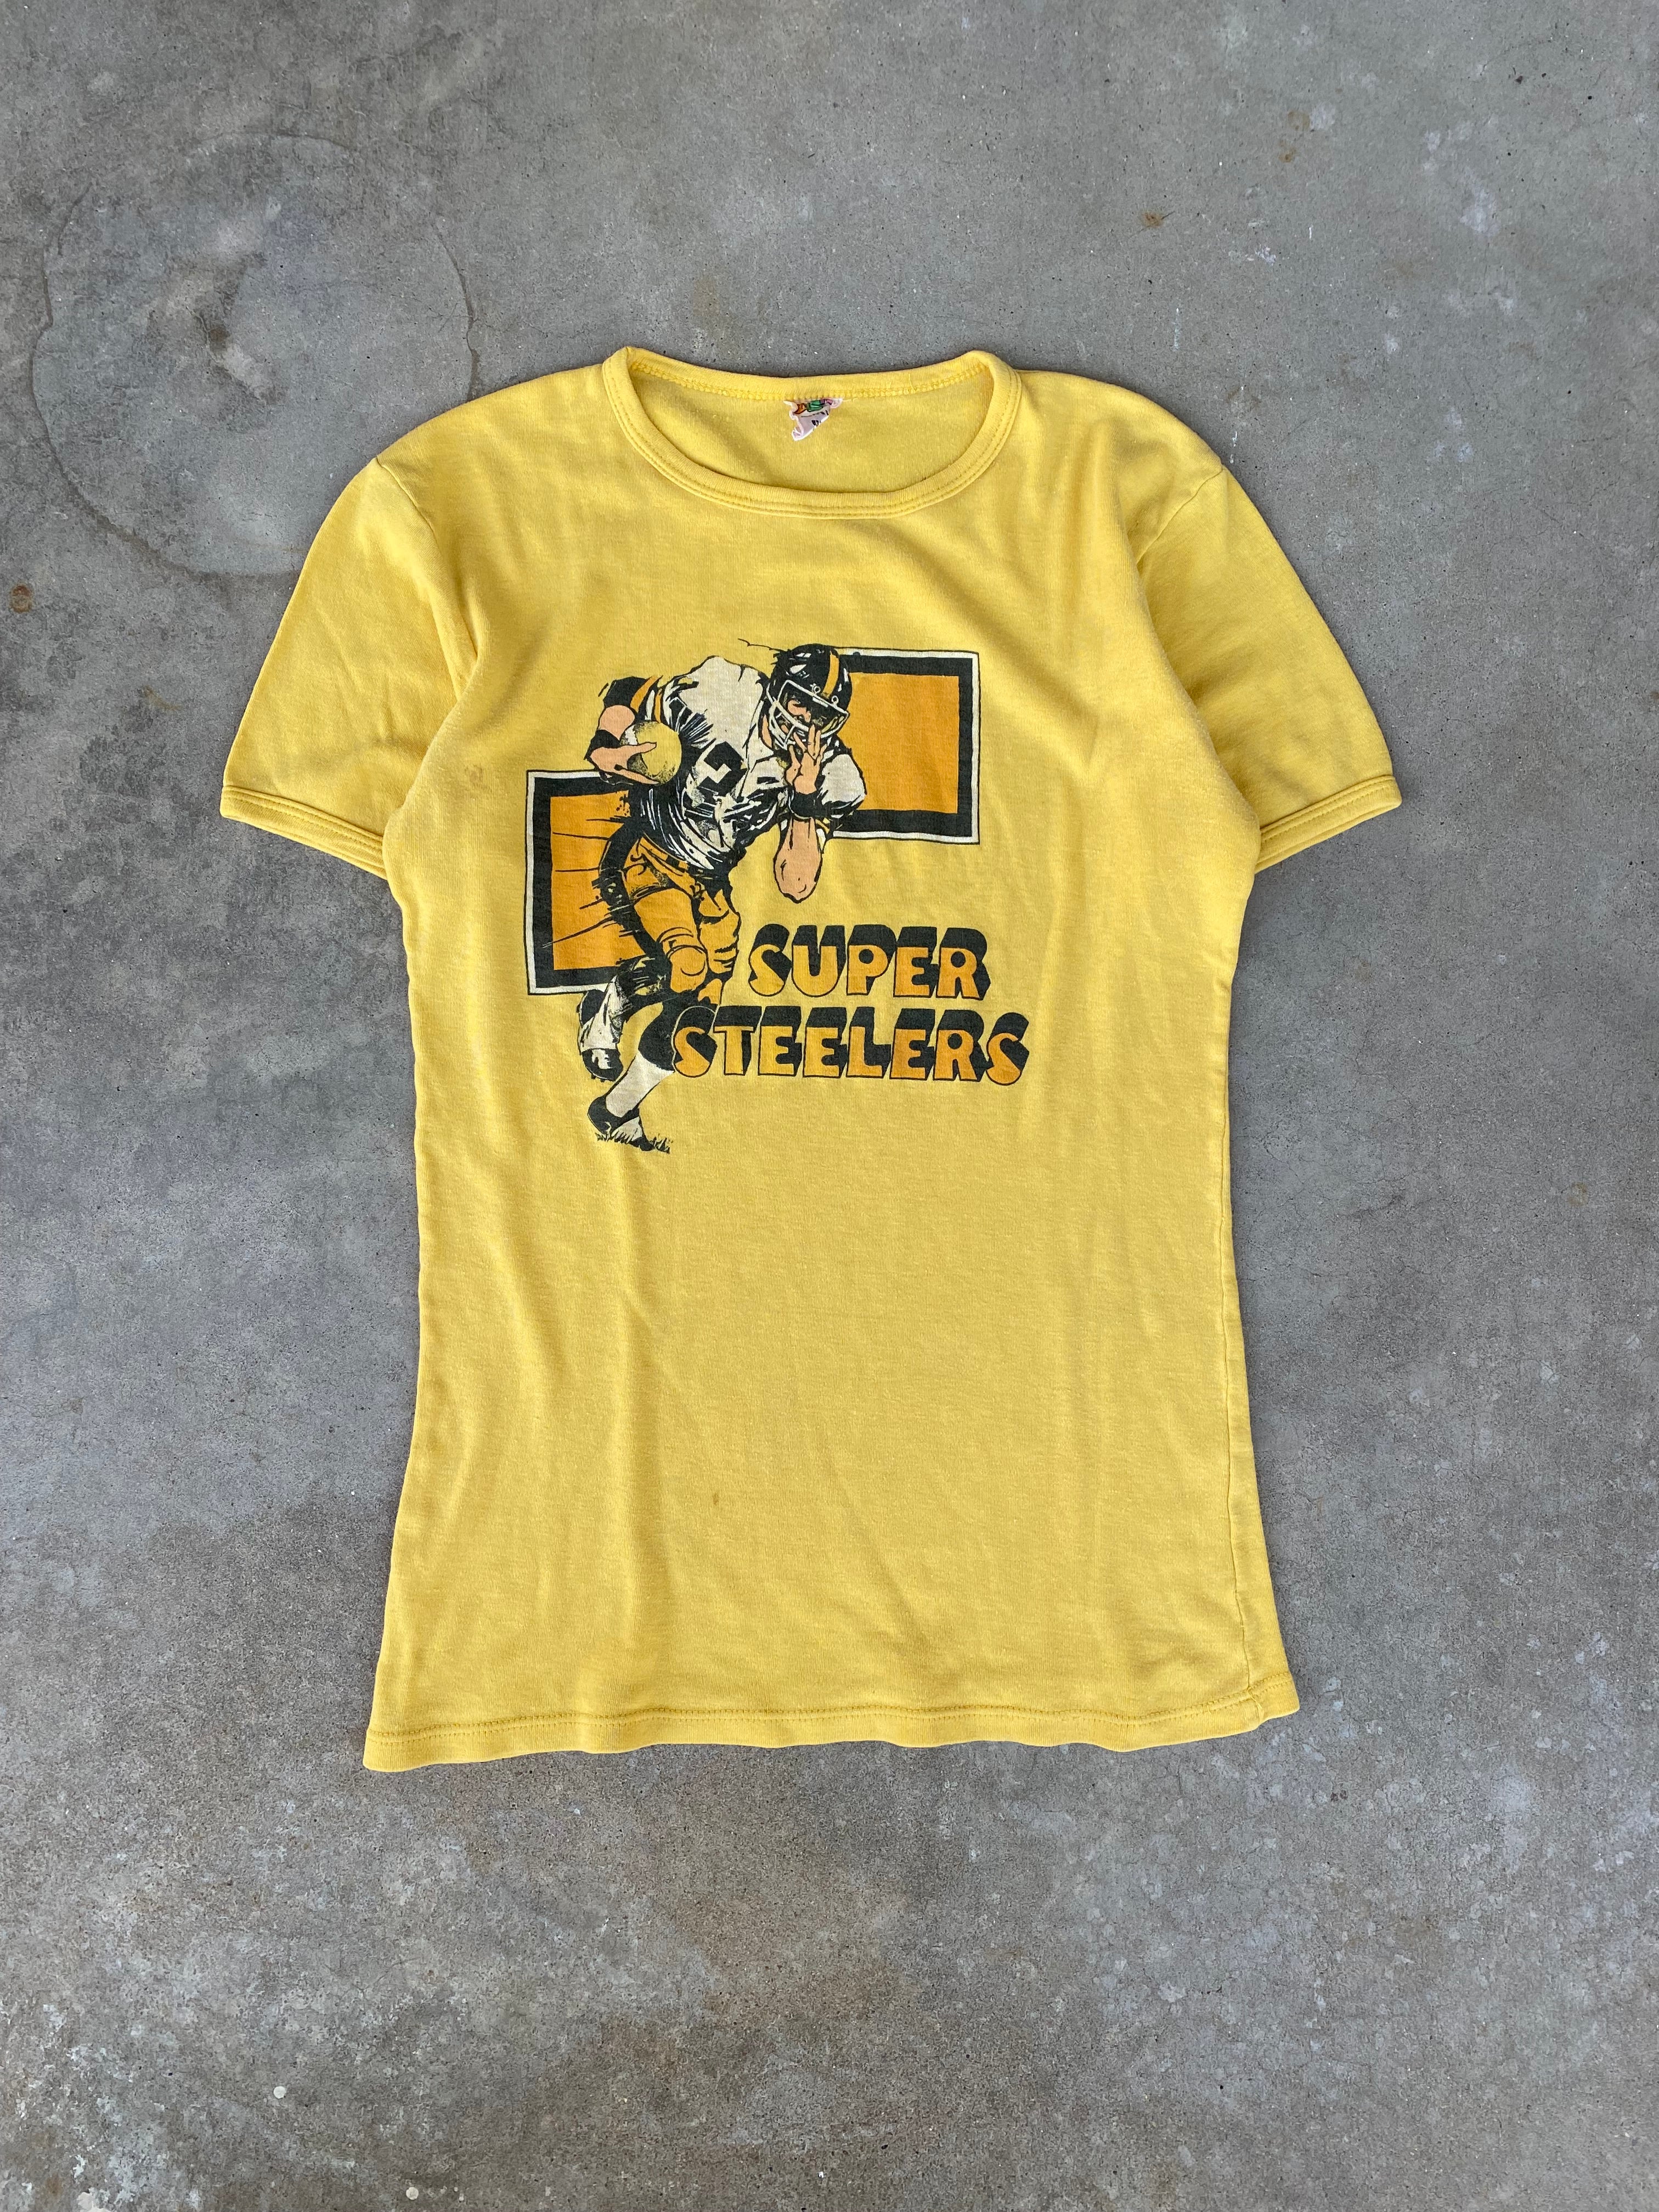 1970s Super Steelers T-Shirt (S/M)